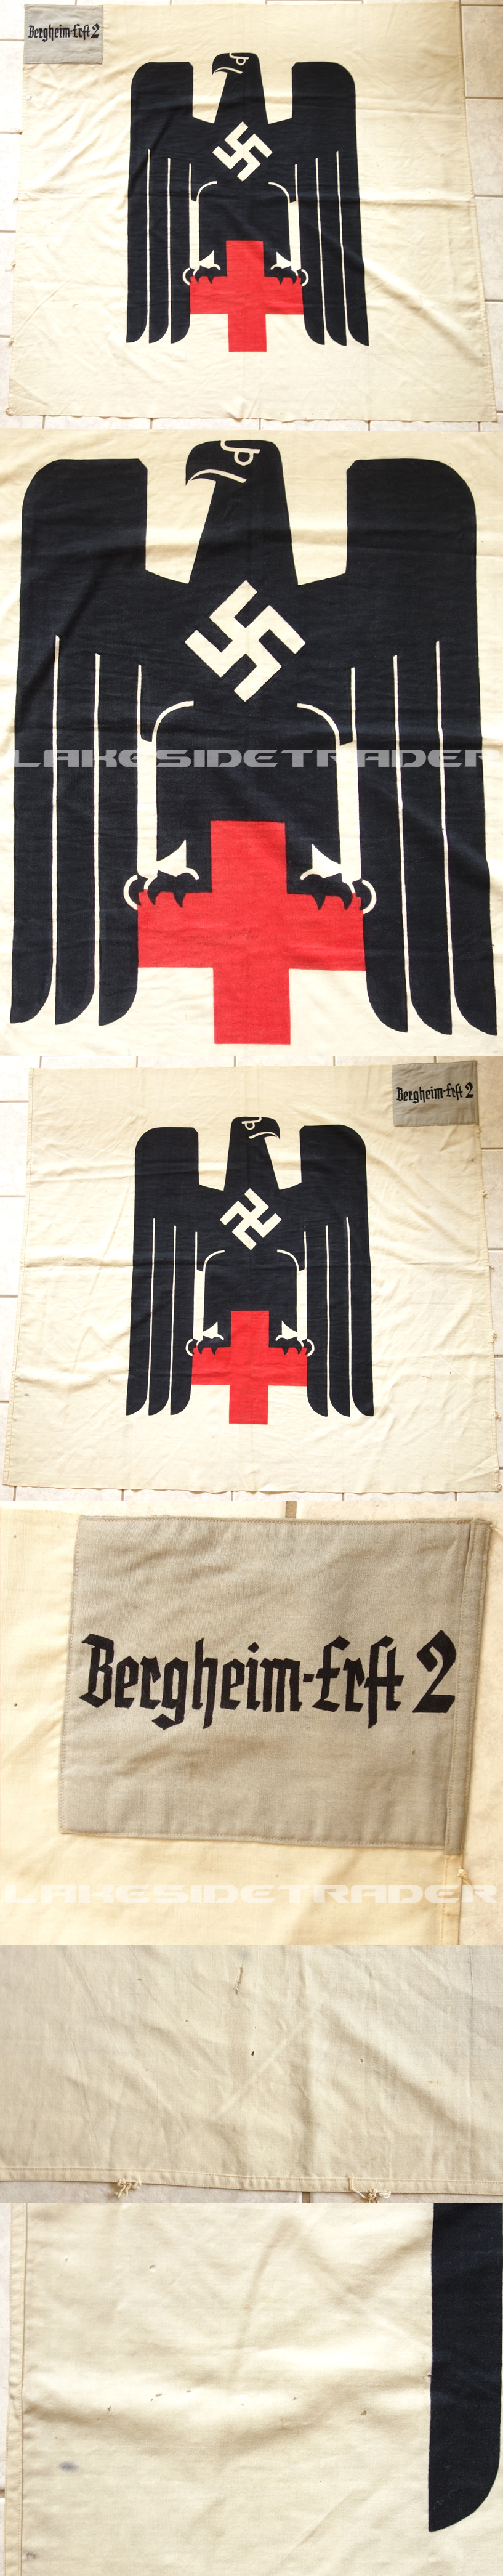 Red Cross Unit Flag